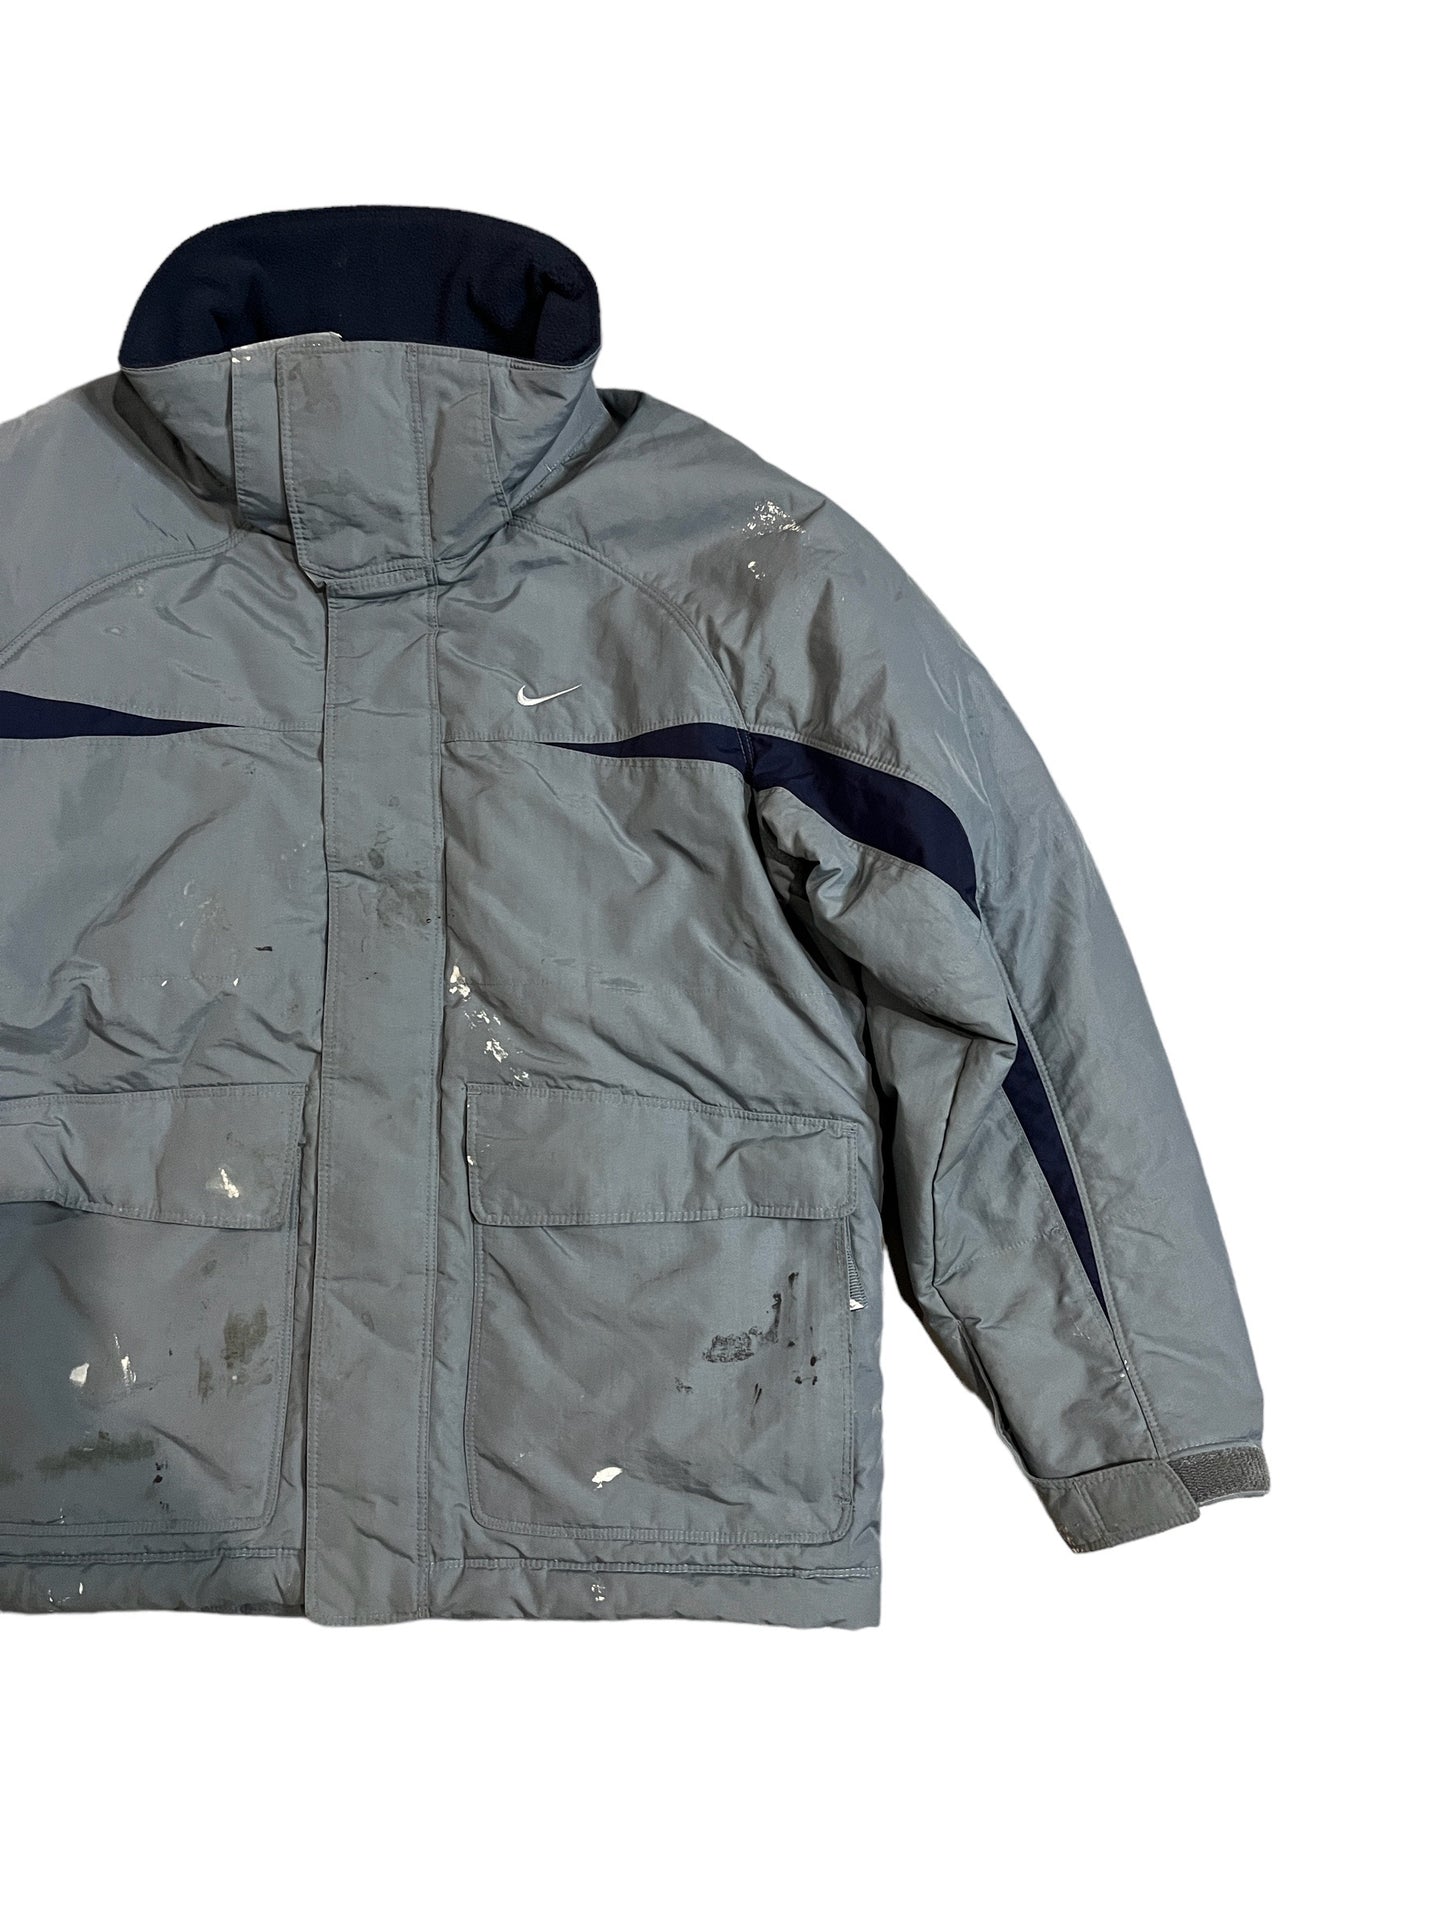 Vintage Nike Jacket Grey